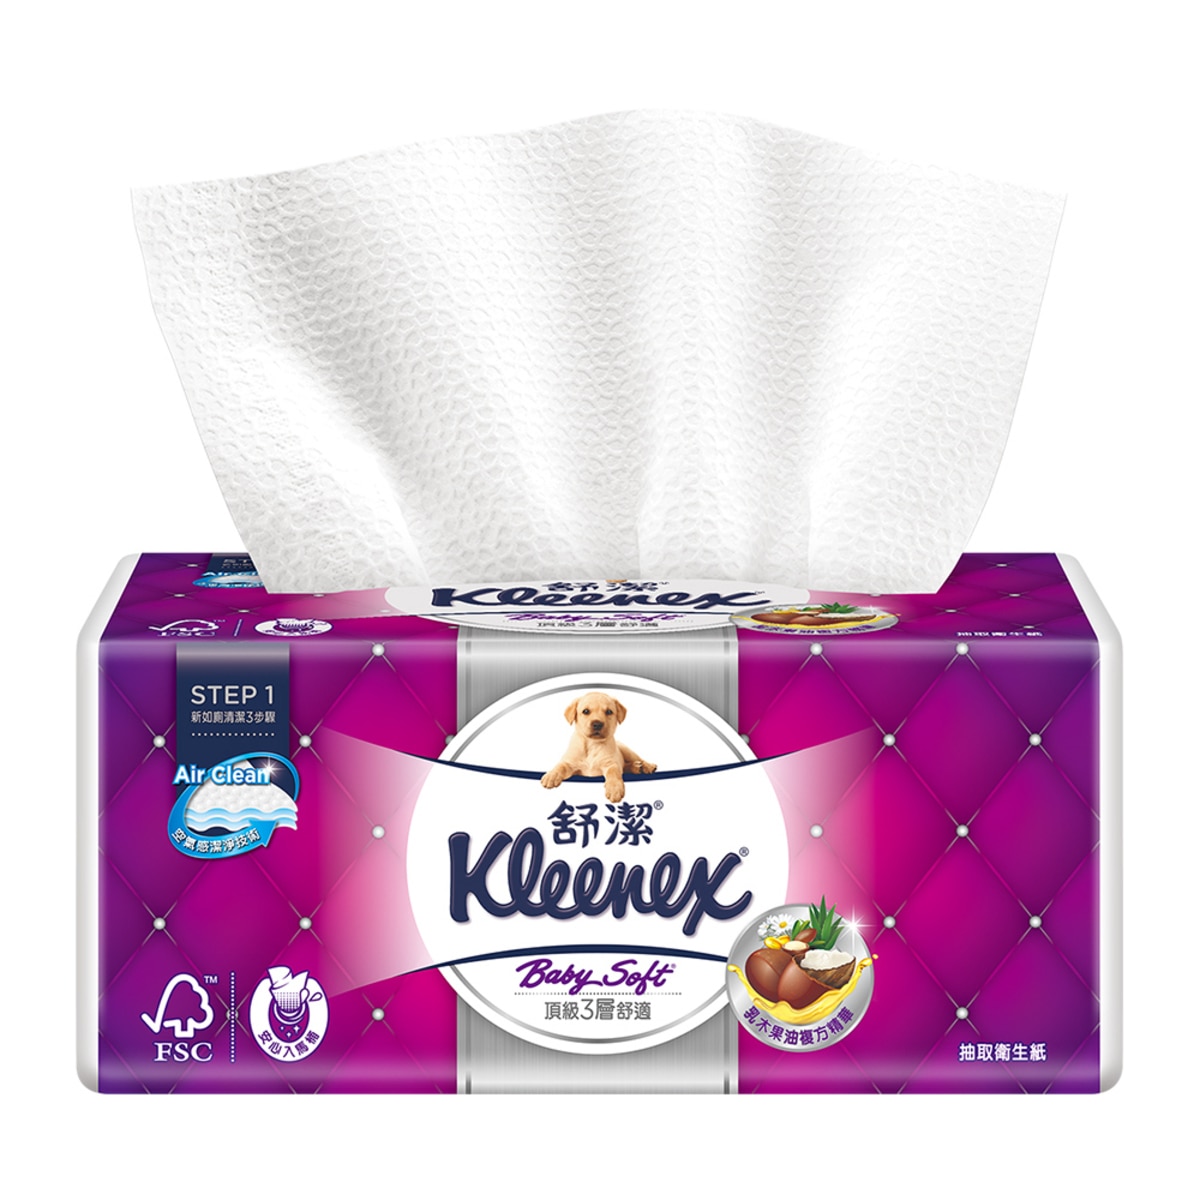 Kleenex 舒潔 三層抽取式衛生紙 110張 X 60入